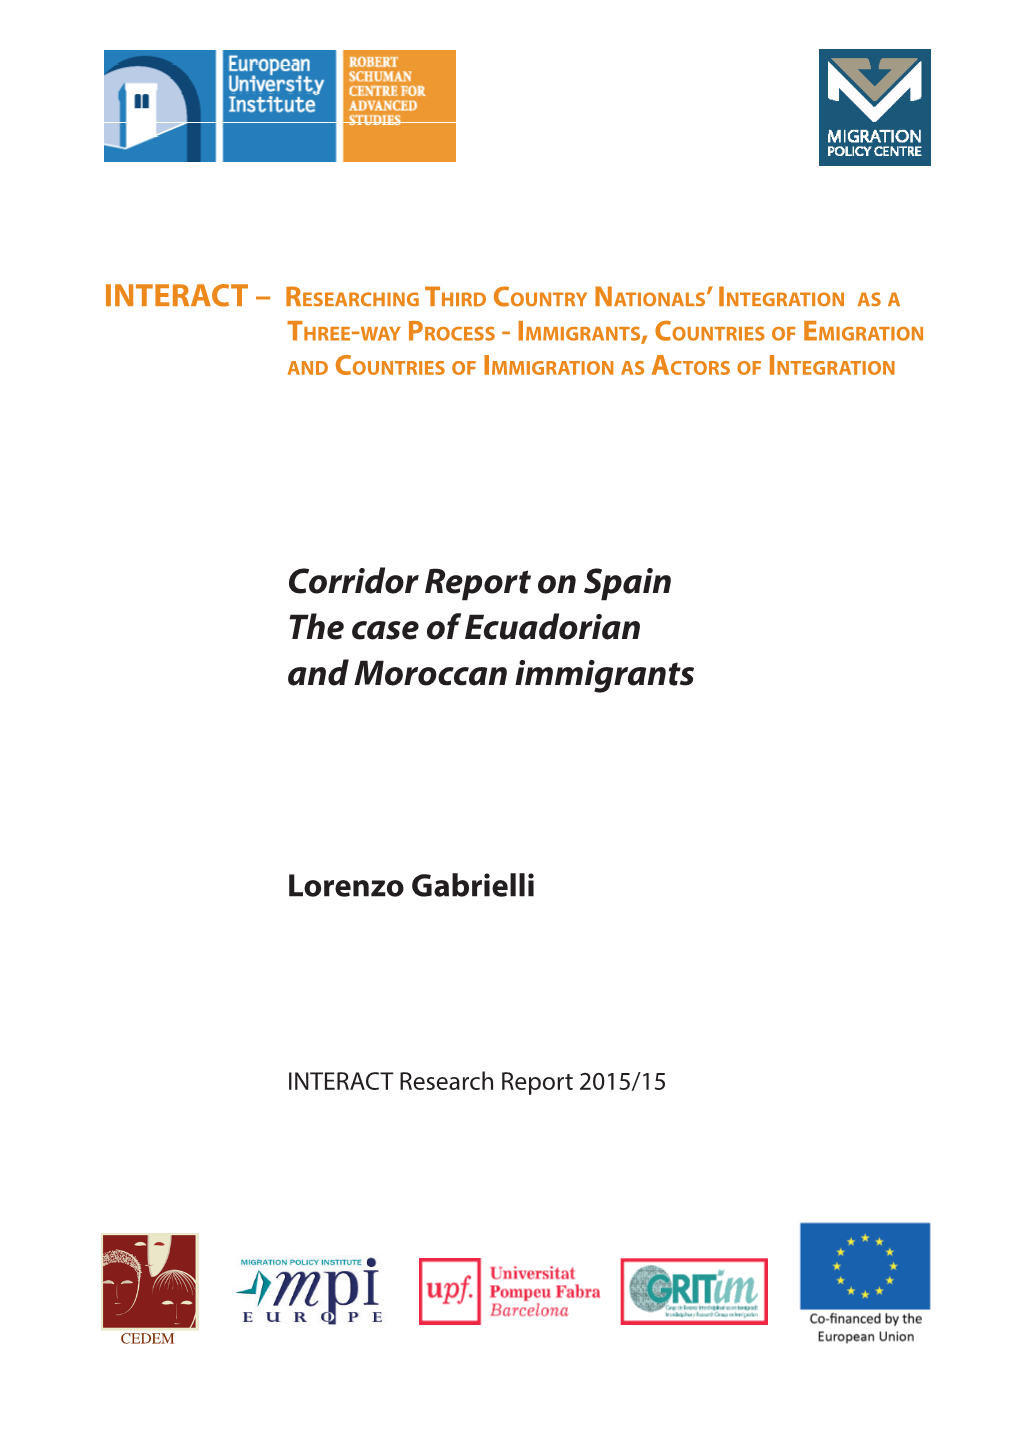 Corridor Report on Spain the Case of Ecuadorian and Moroccan Immigrants